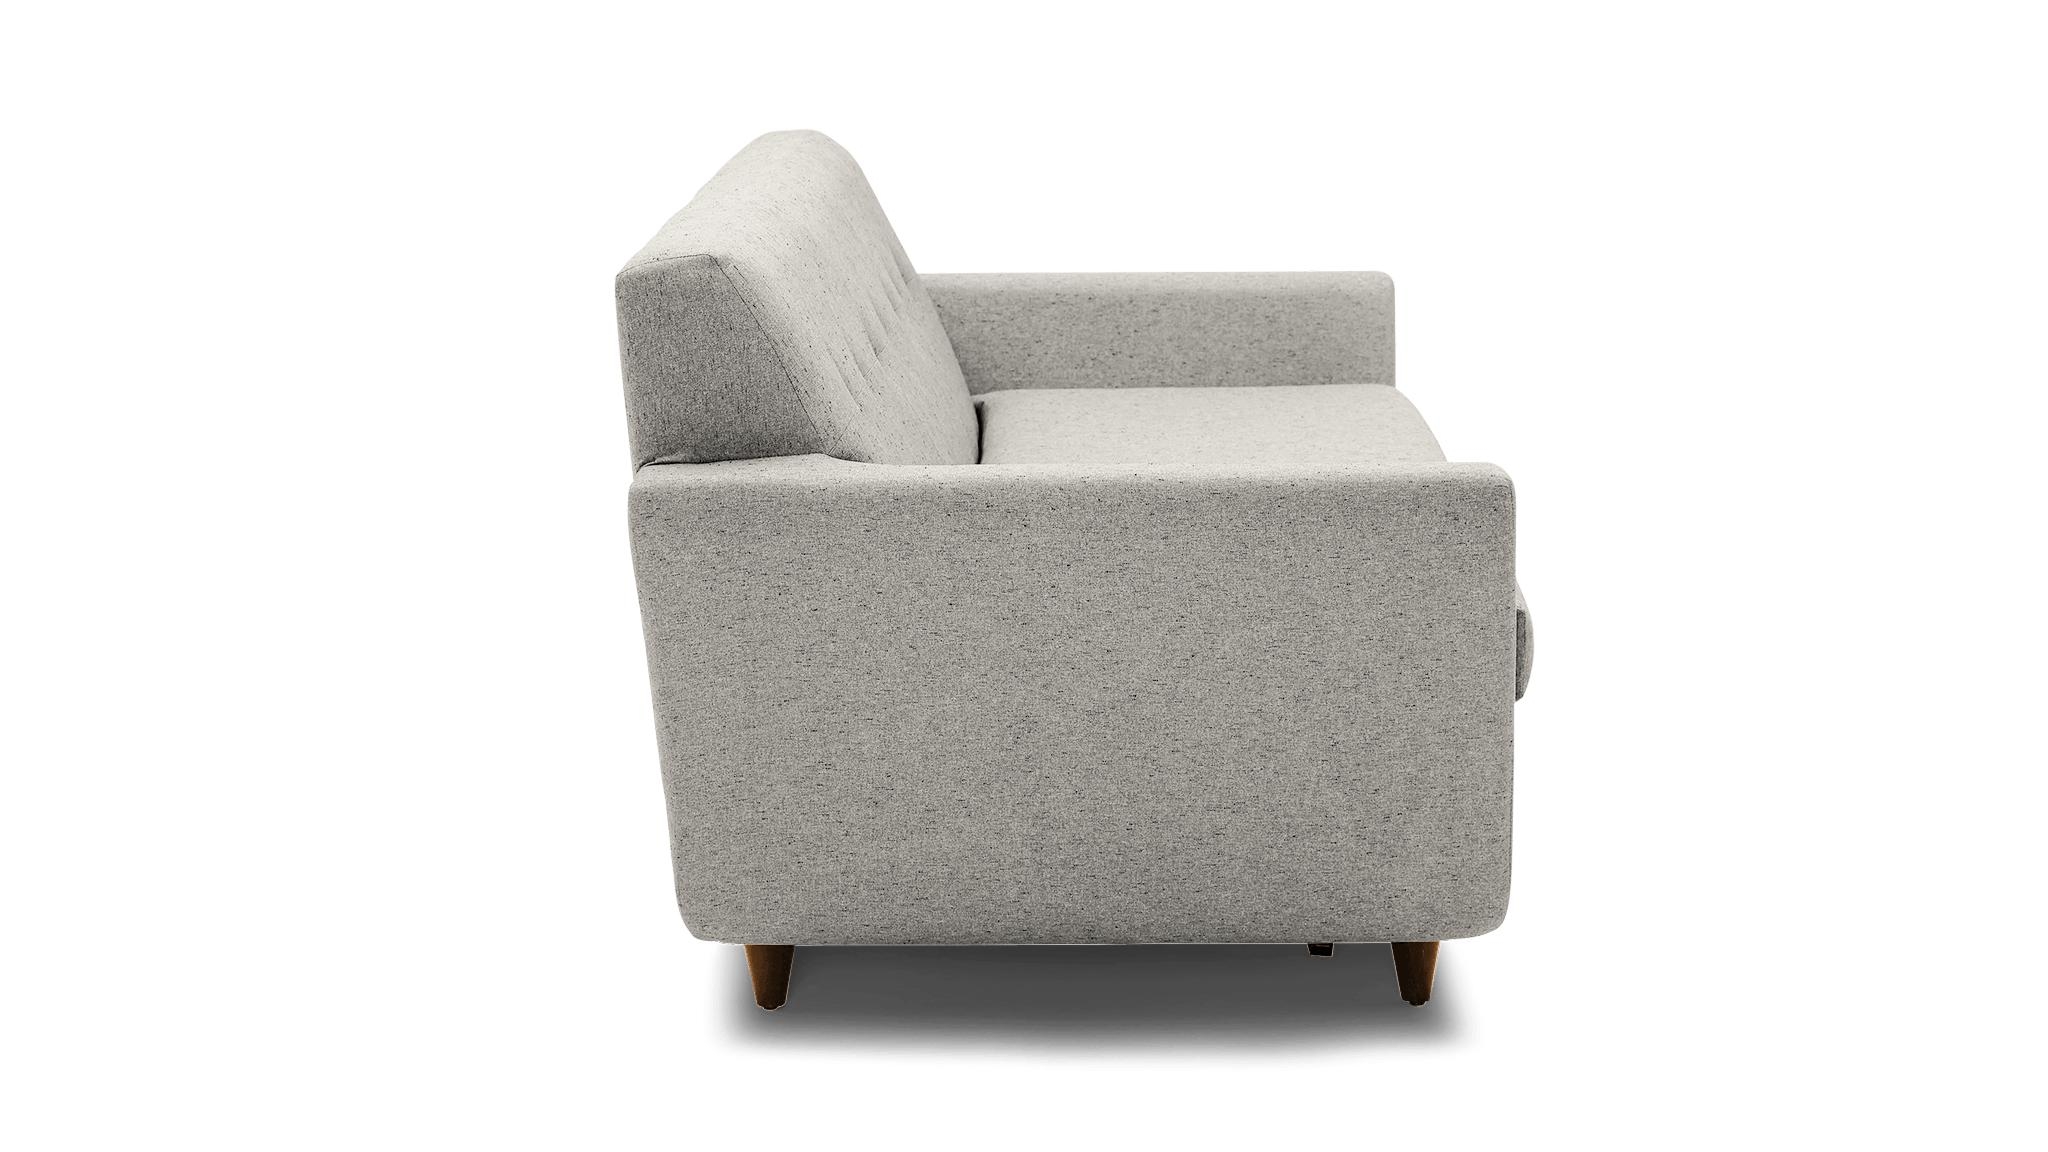 Gray Hughes Mid Century Modern Sleeper Sofa - Bloke Cotton - Mocha - Image 2